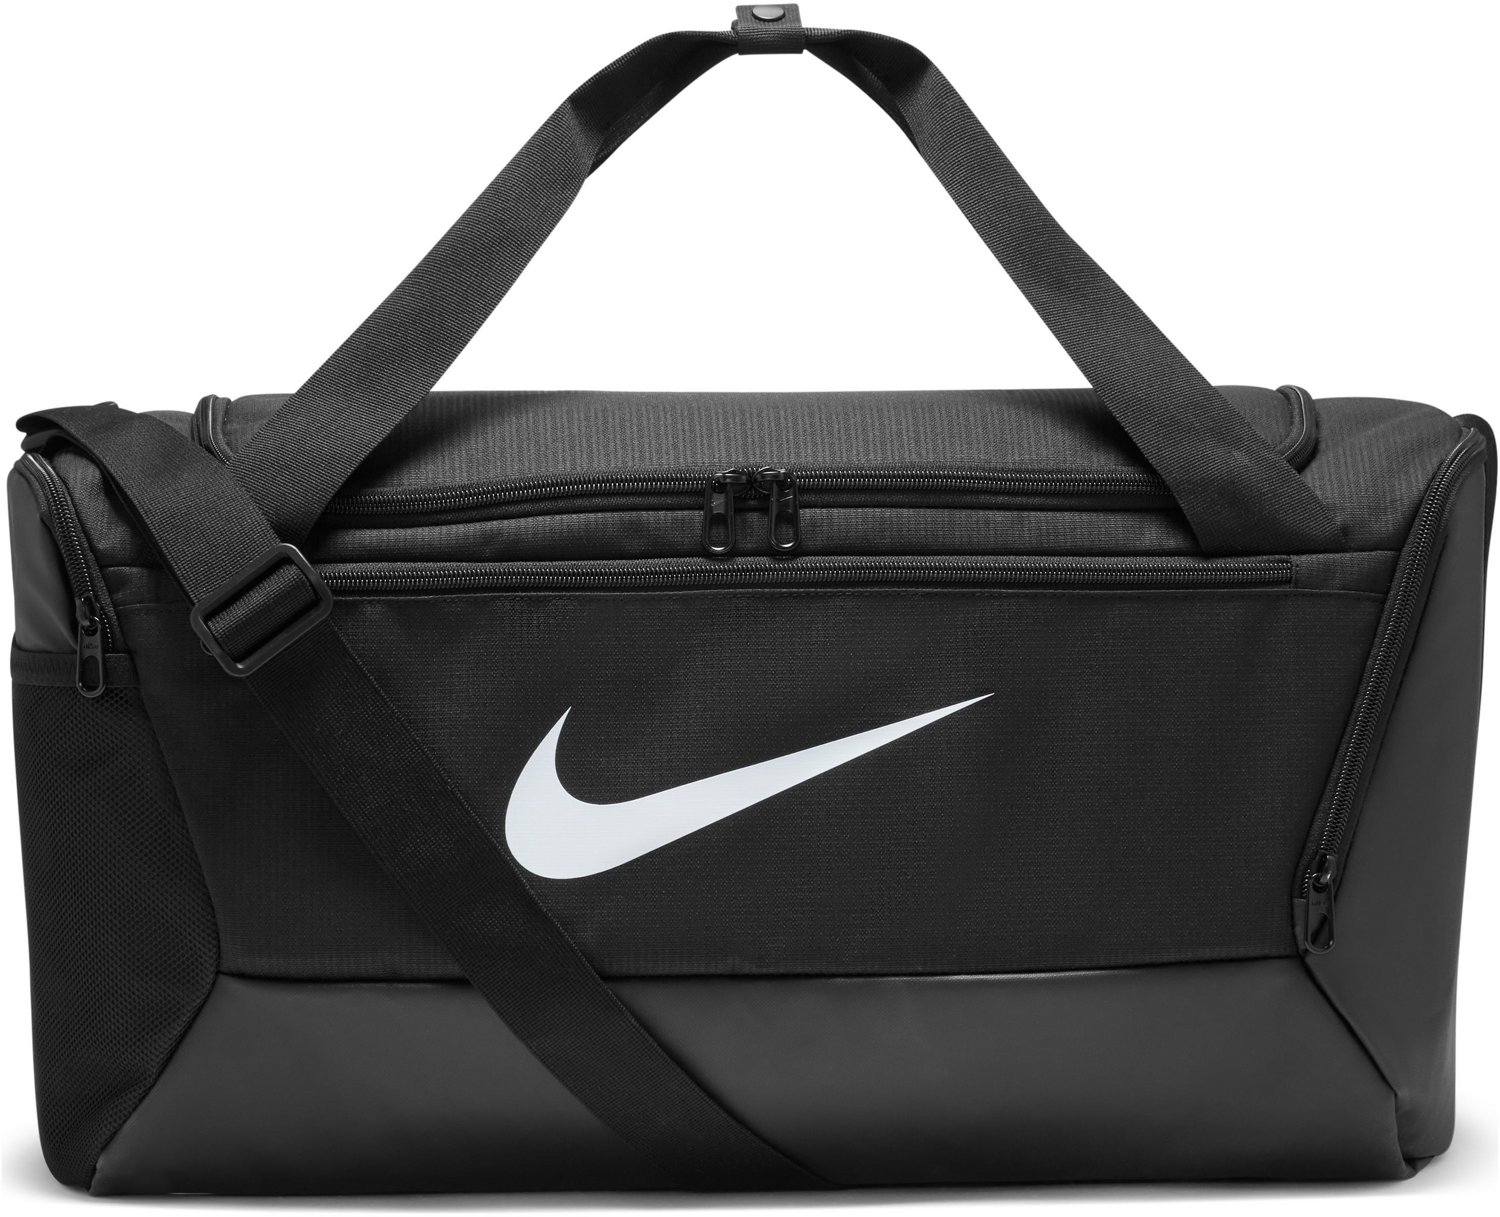 Nike Training Small Duffel Bag | Free Shipping at Academy